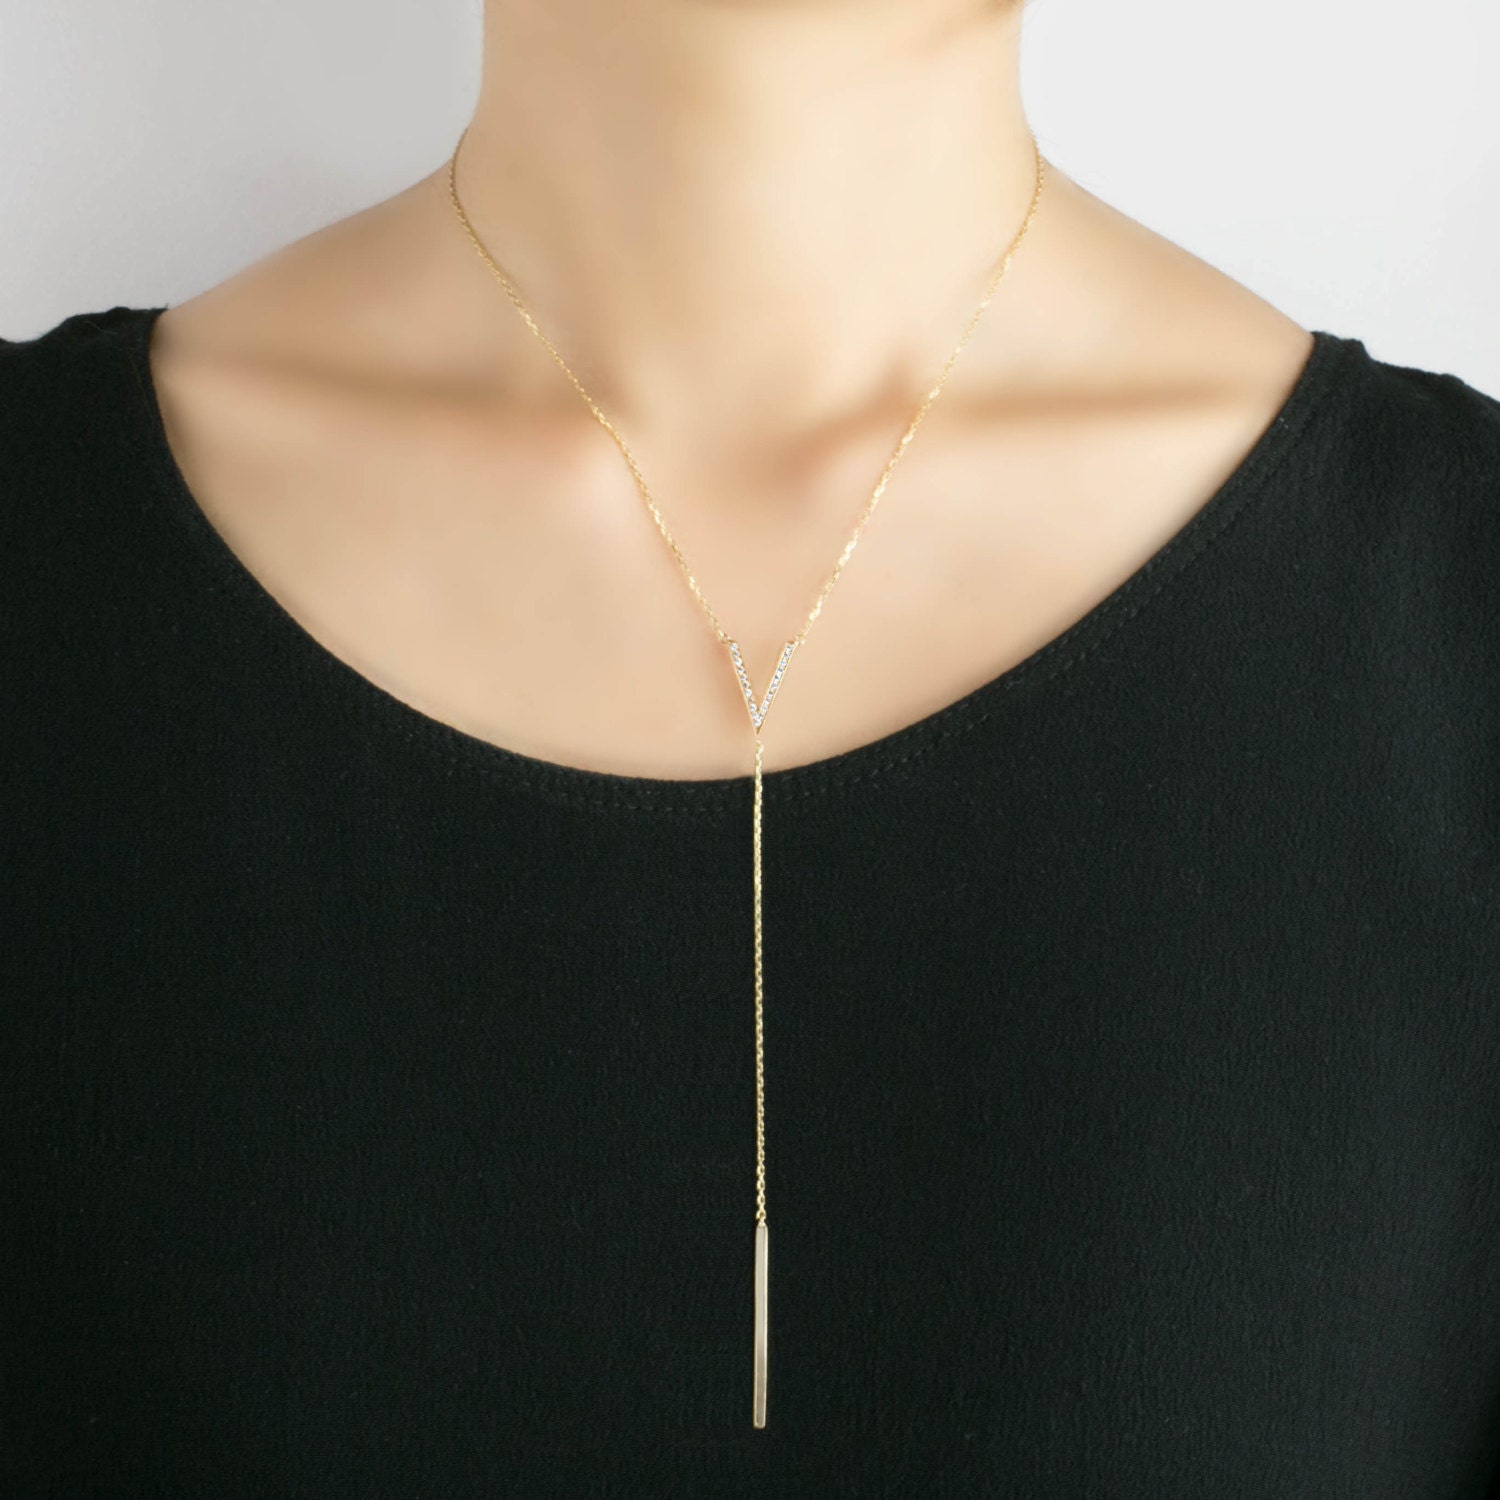 Pave v shape lariat necklace 14k gold Y necklace by EnveroJewelry